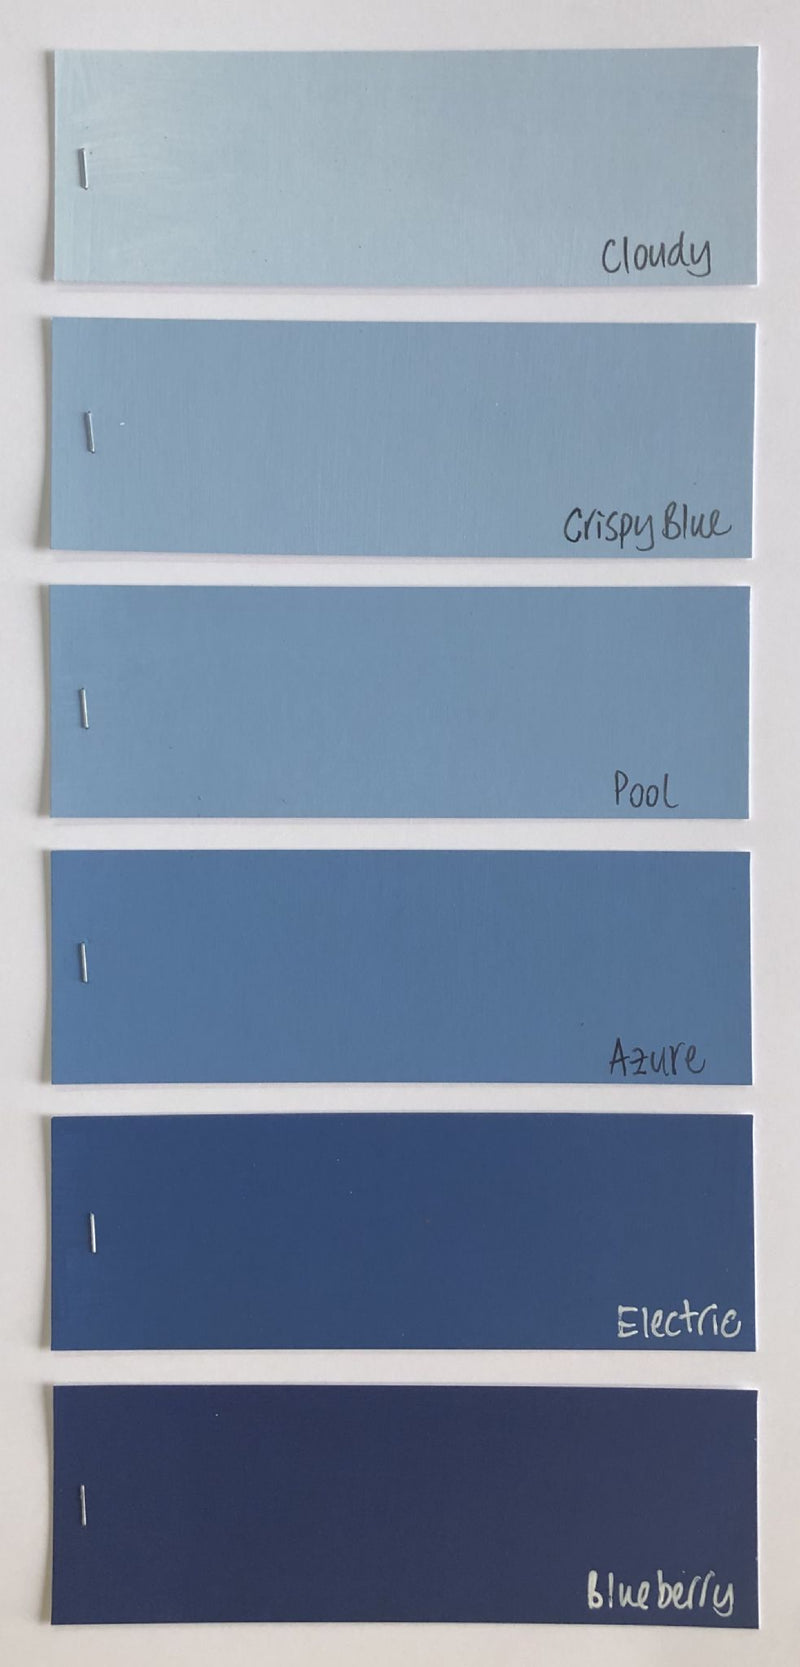 PaperArtsy - Fresco Chalk Paint - Crispy Blue